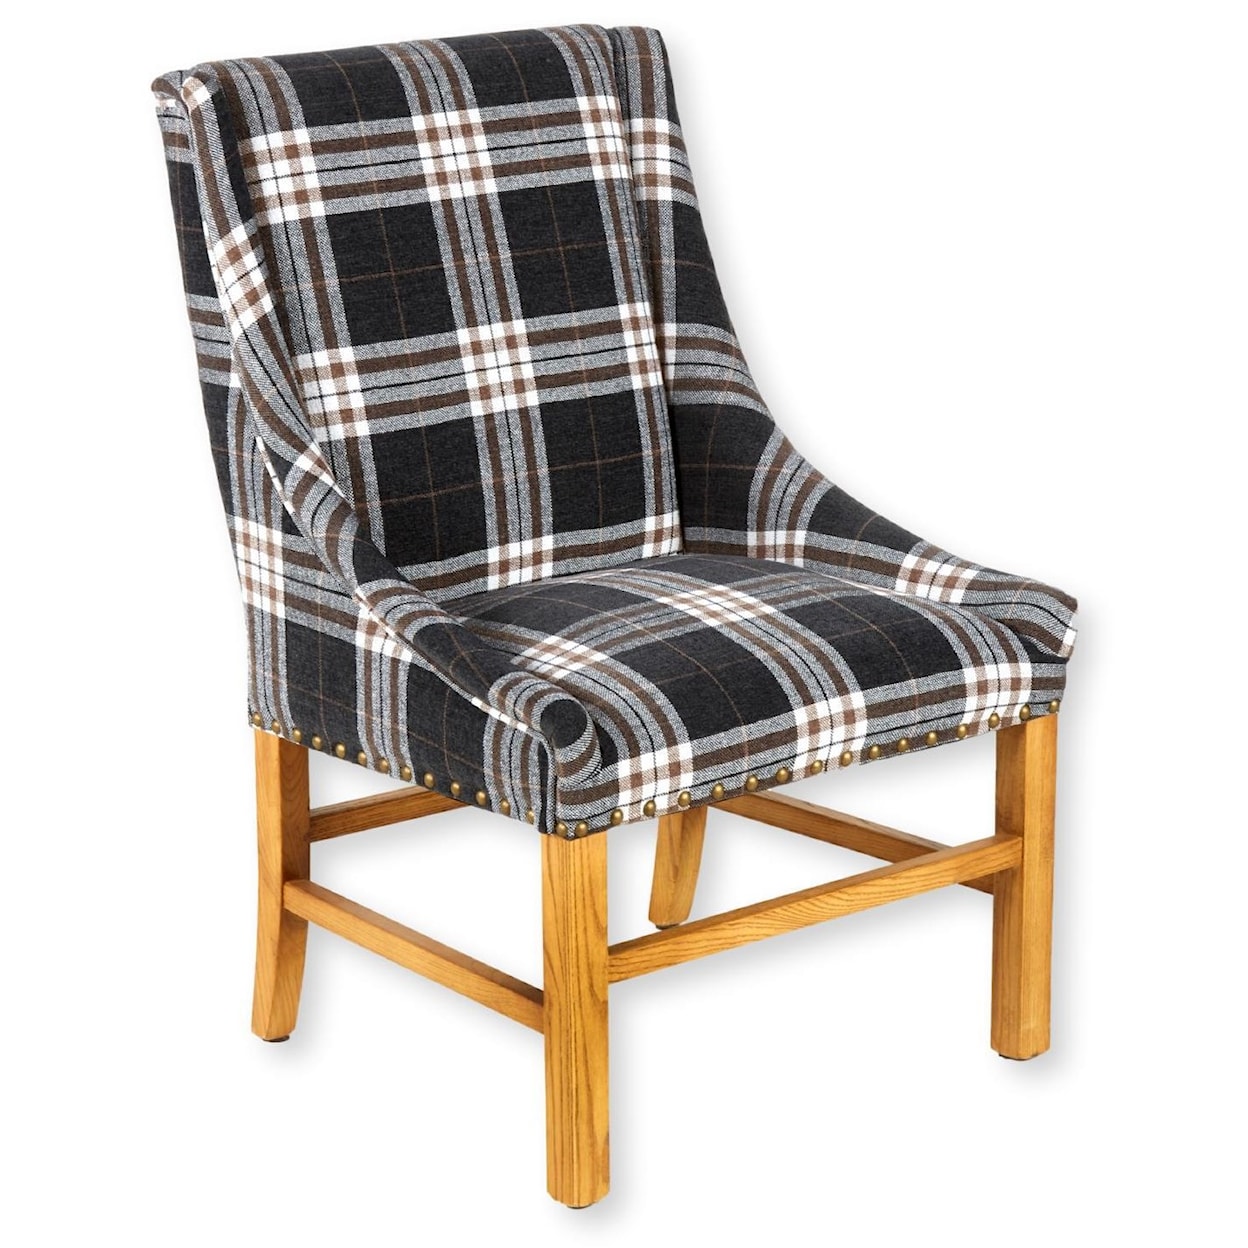 EAGLE INDUSTRIES Josh Josh Arm Chair Natural / Tartan Charcoal